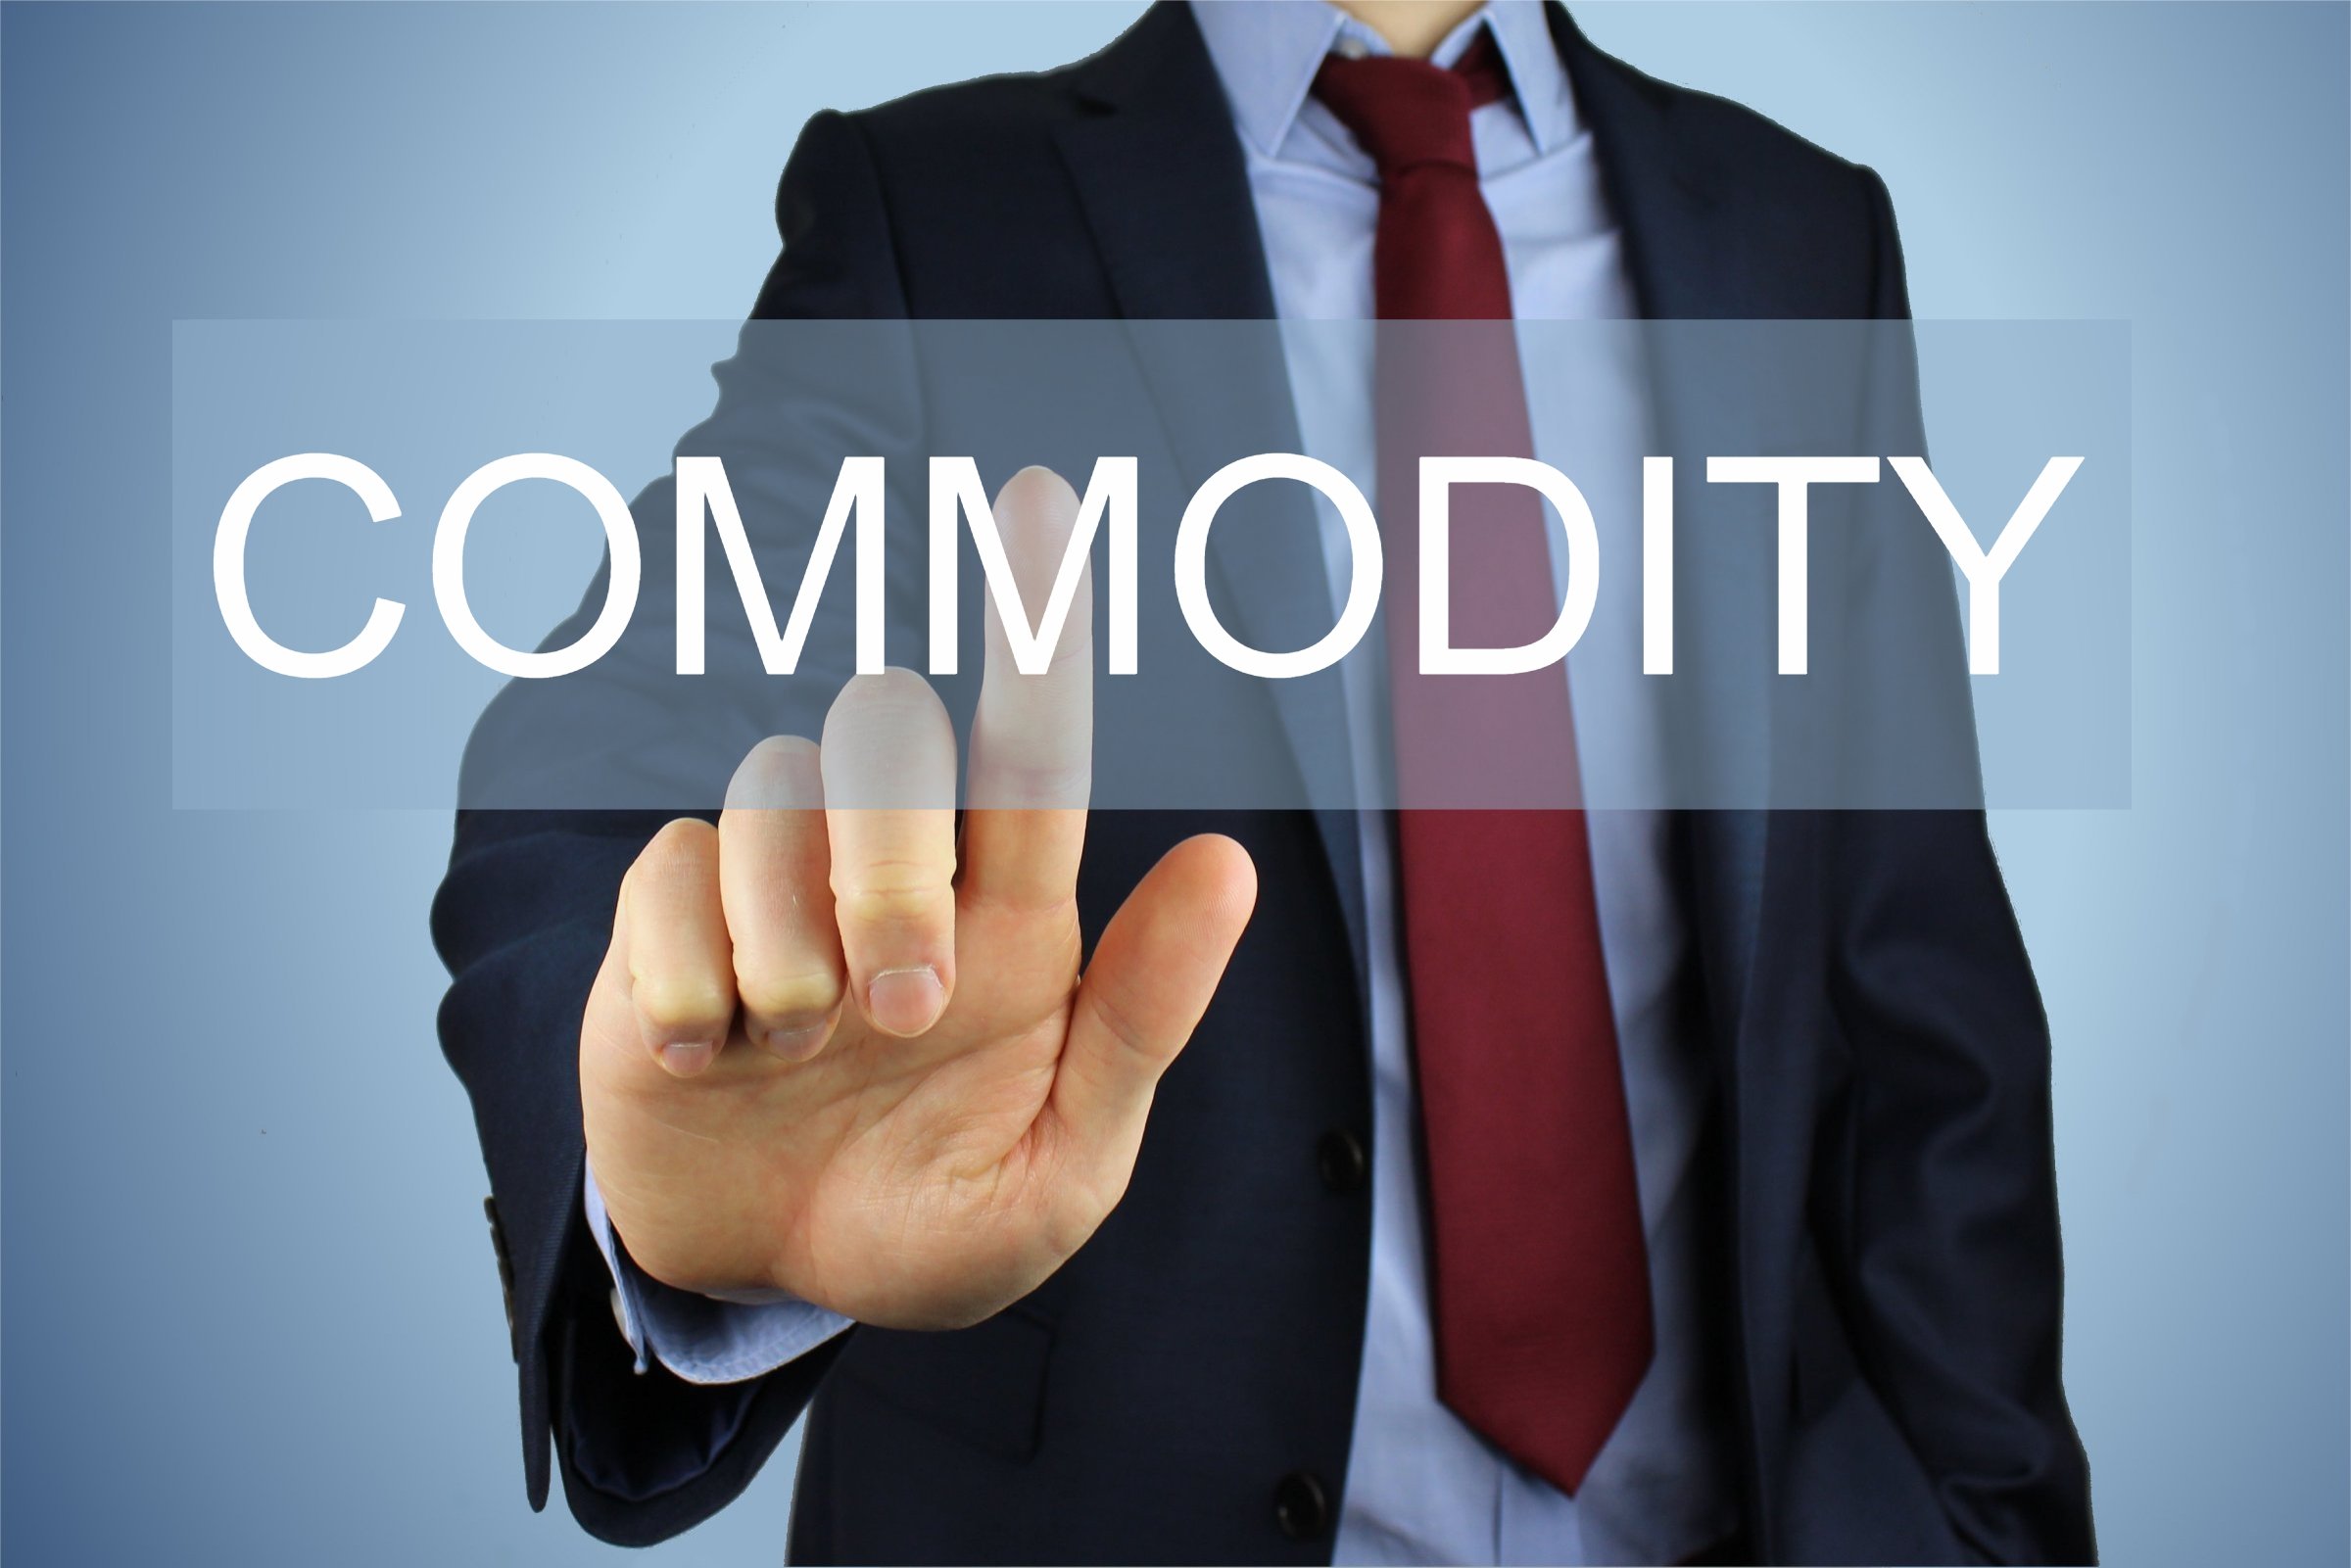 Product vs. Commodity: Marketing and Economics